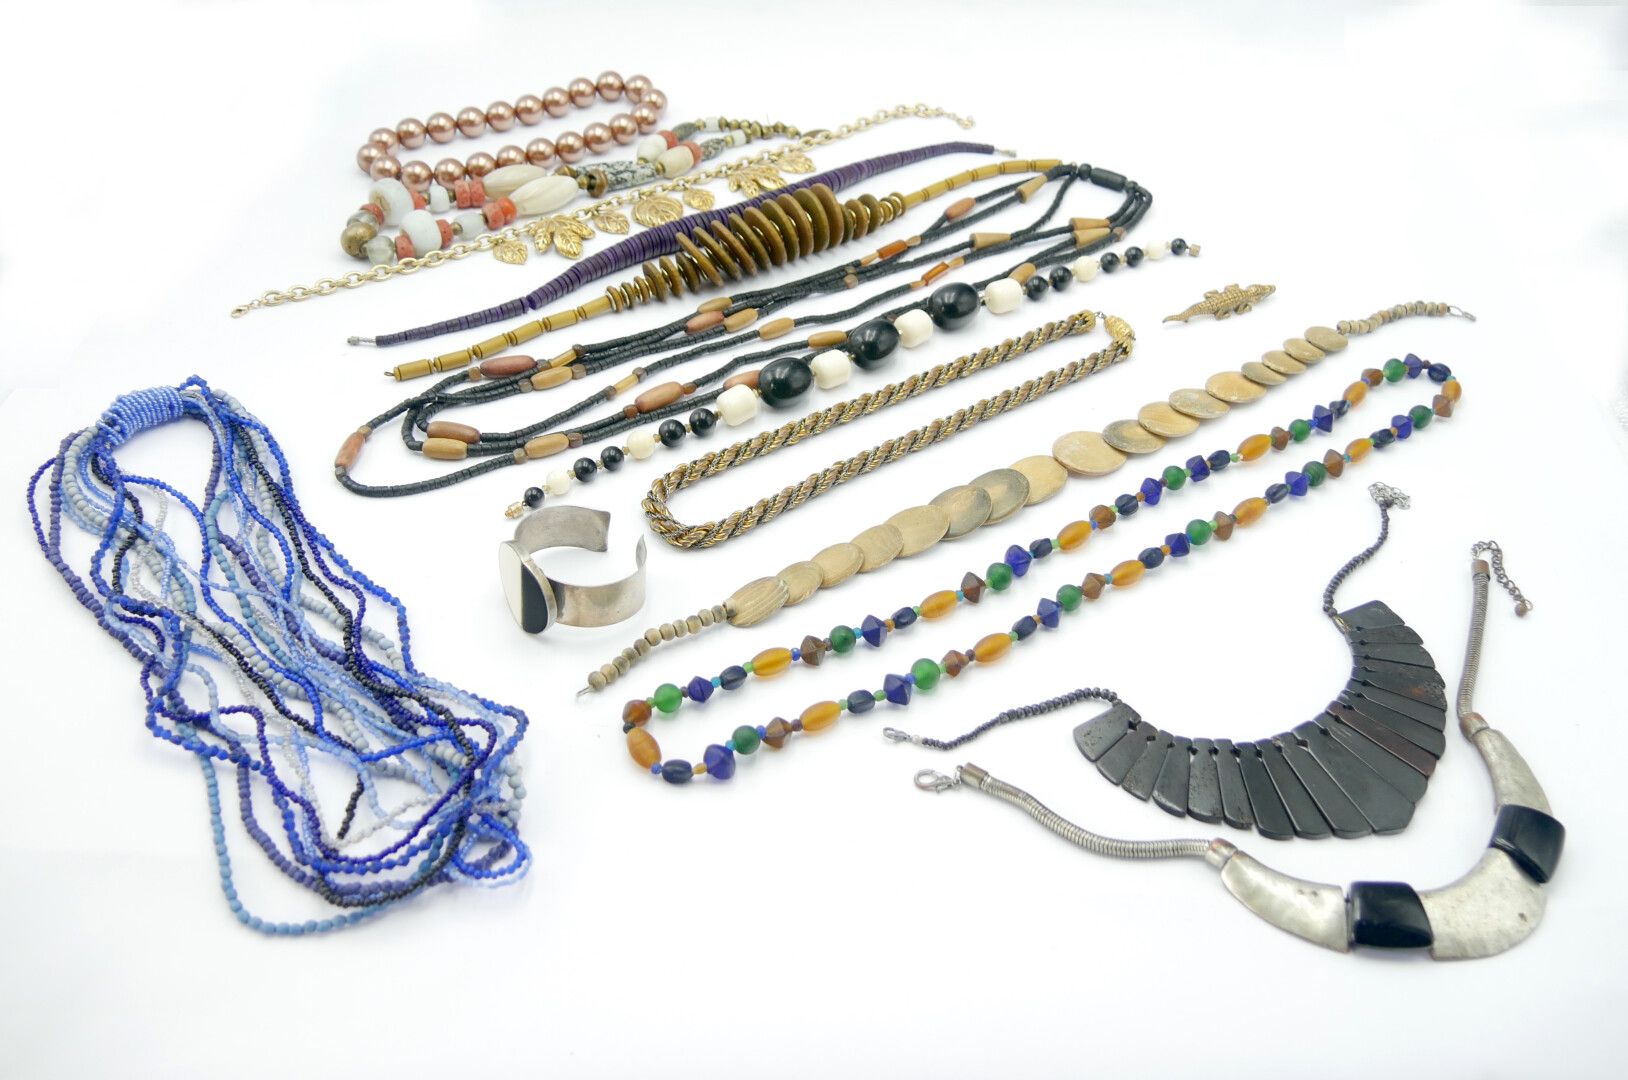 Null 服装珠宝

金属、石头、树脂、木材和玻璃制成的珠宝拍品，包括一个手镯、13条项链和一个鳄鱼胸针

不同的渊源

全部处于使用状态